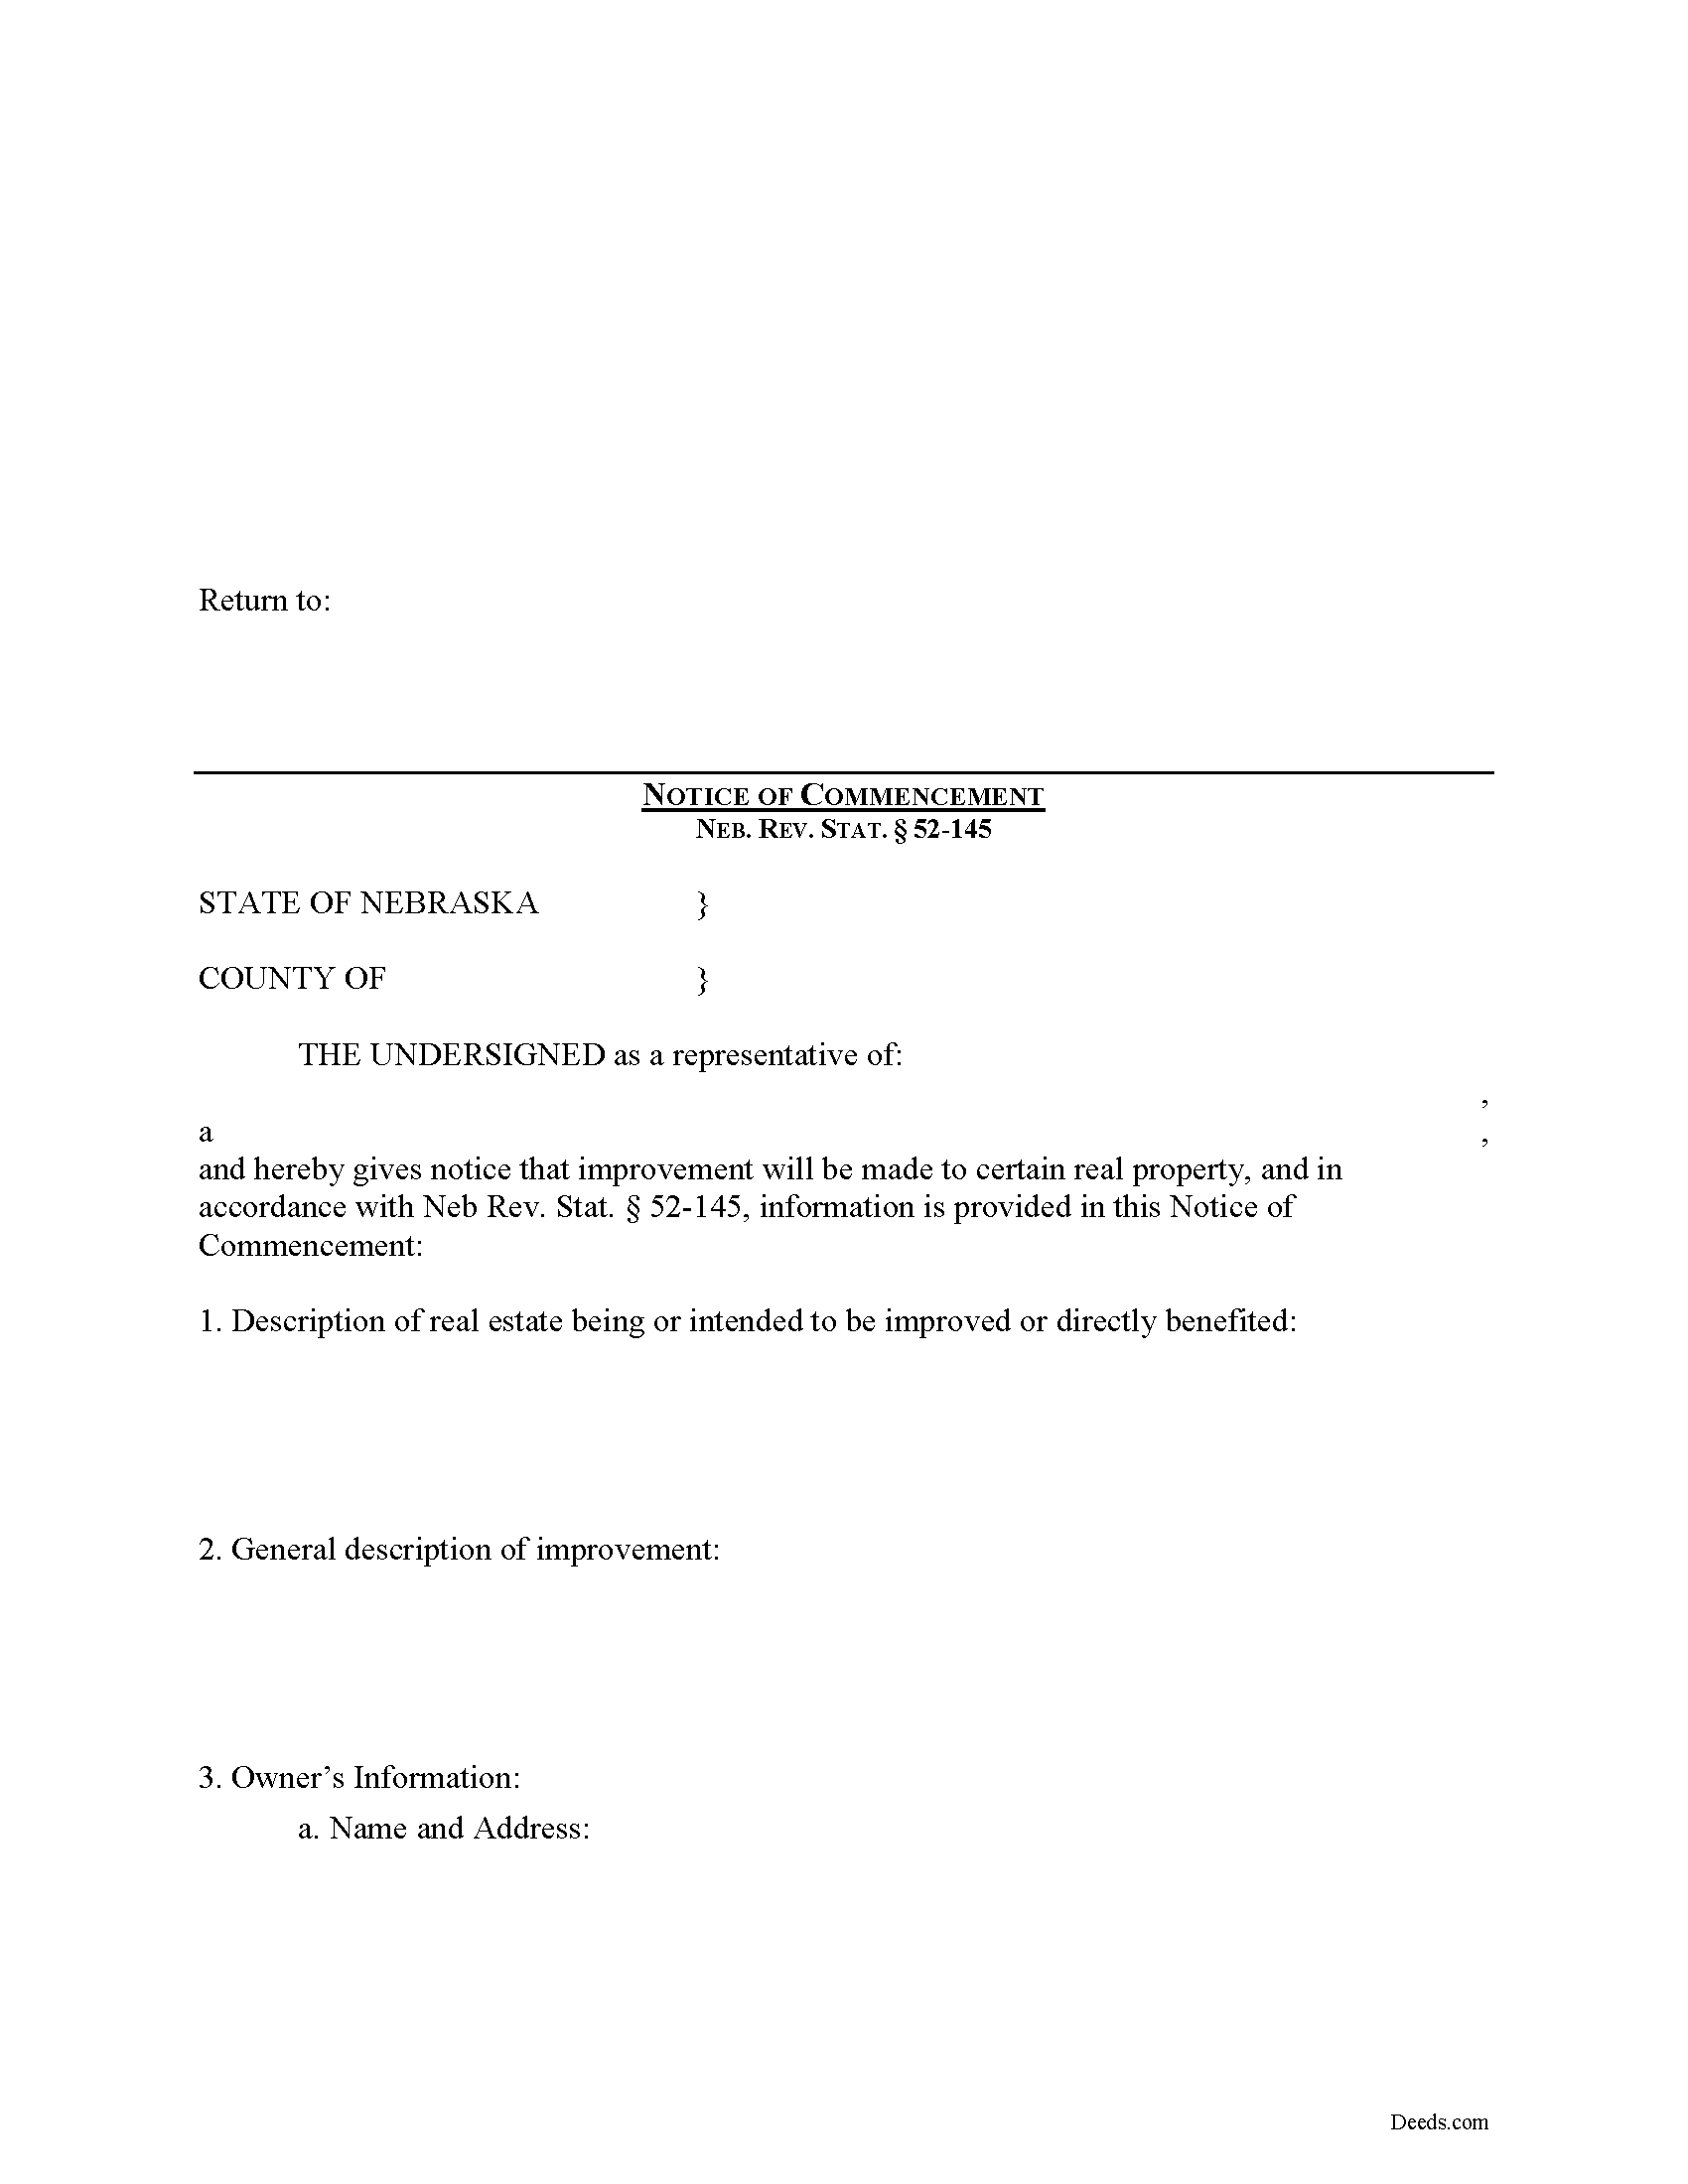 Nebraska Owner Notice of Commencement Image